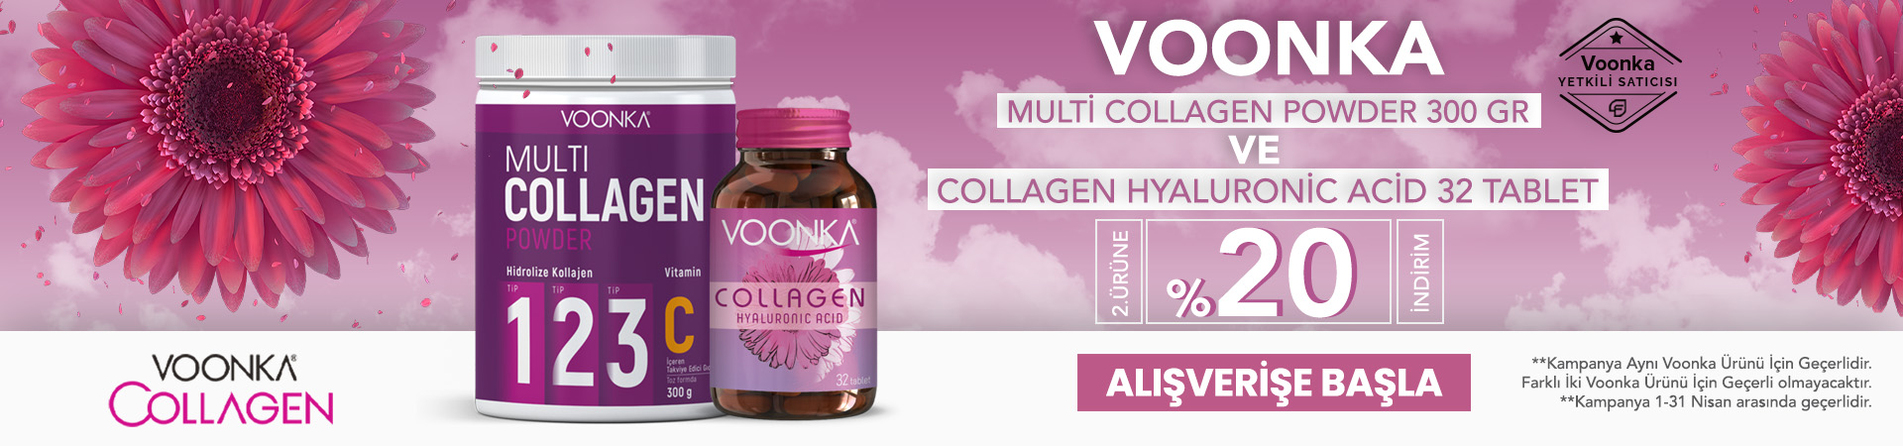 voonka-collagen-ve-hyaluronic-acid